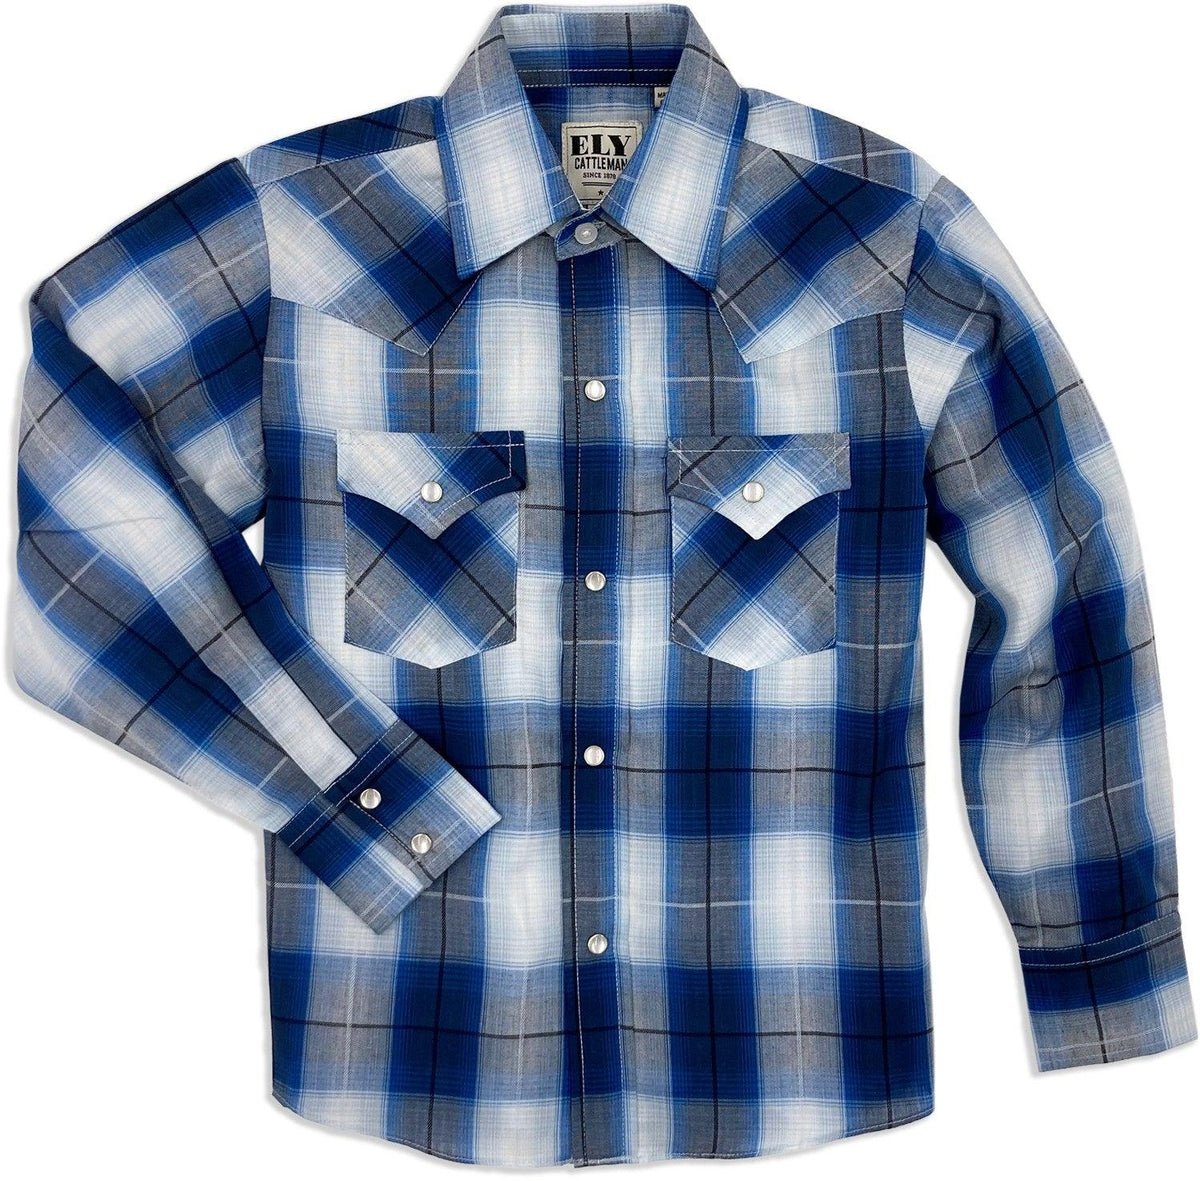 Ely Cattleman Boy's Long Sleeve Textured Blue Plaid Shirt - Flyclothing LLC